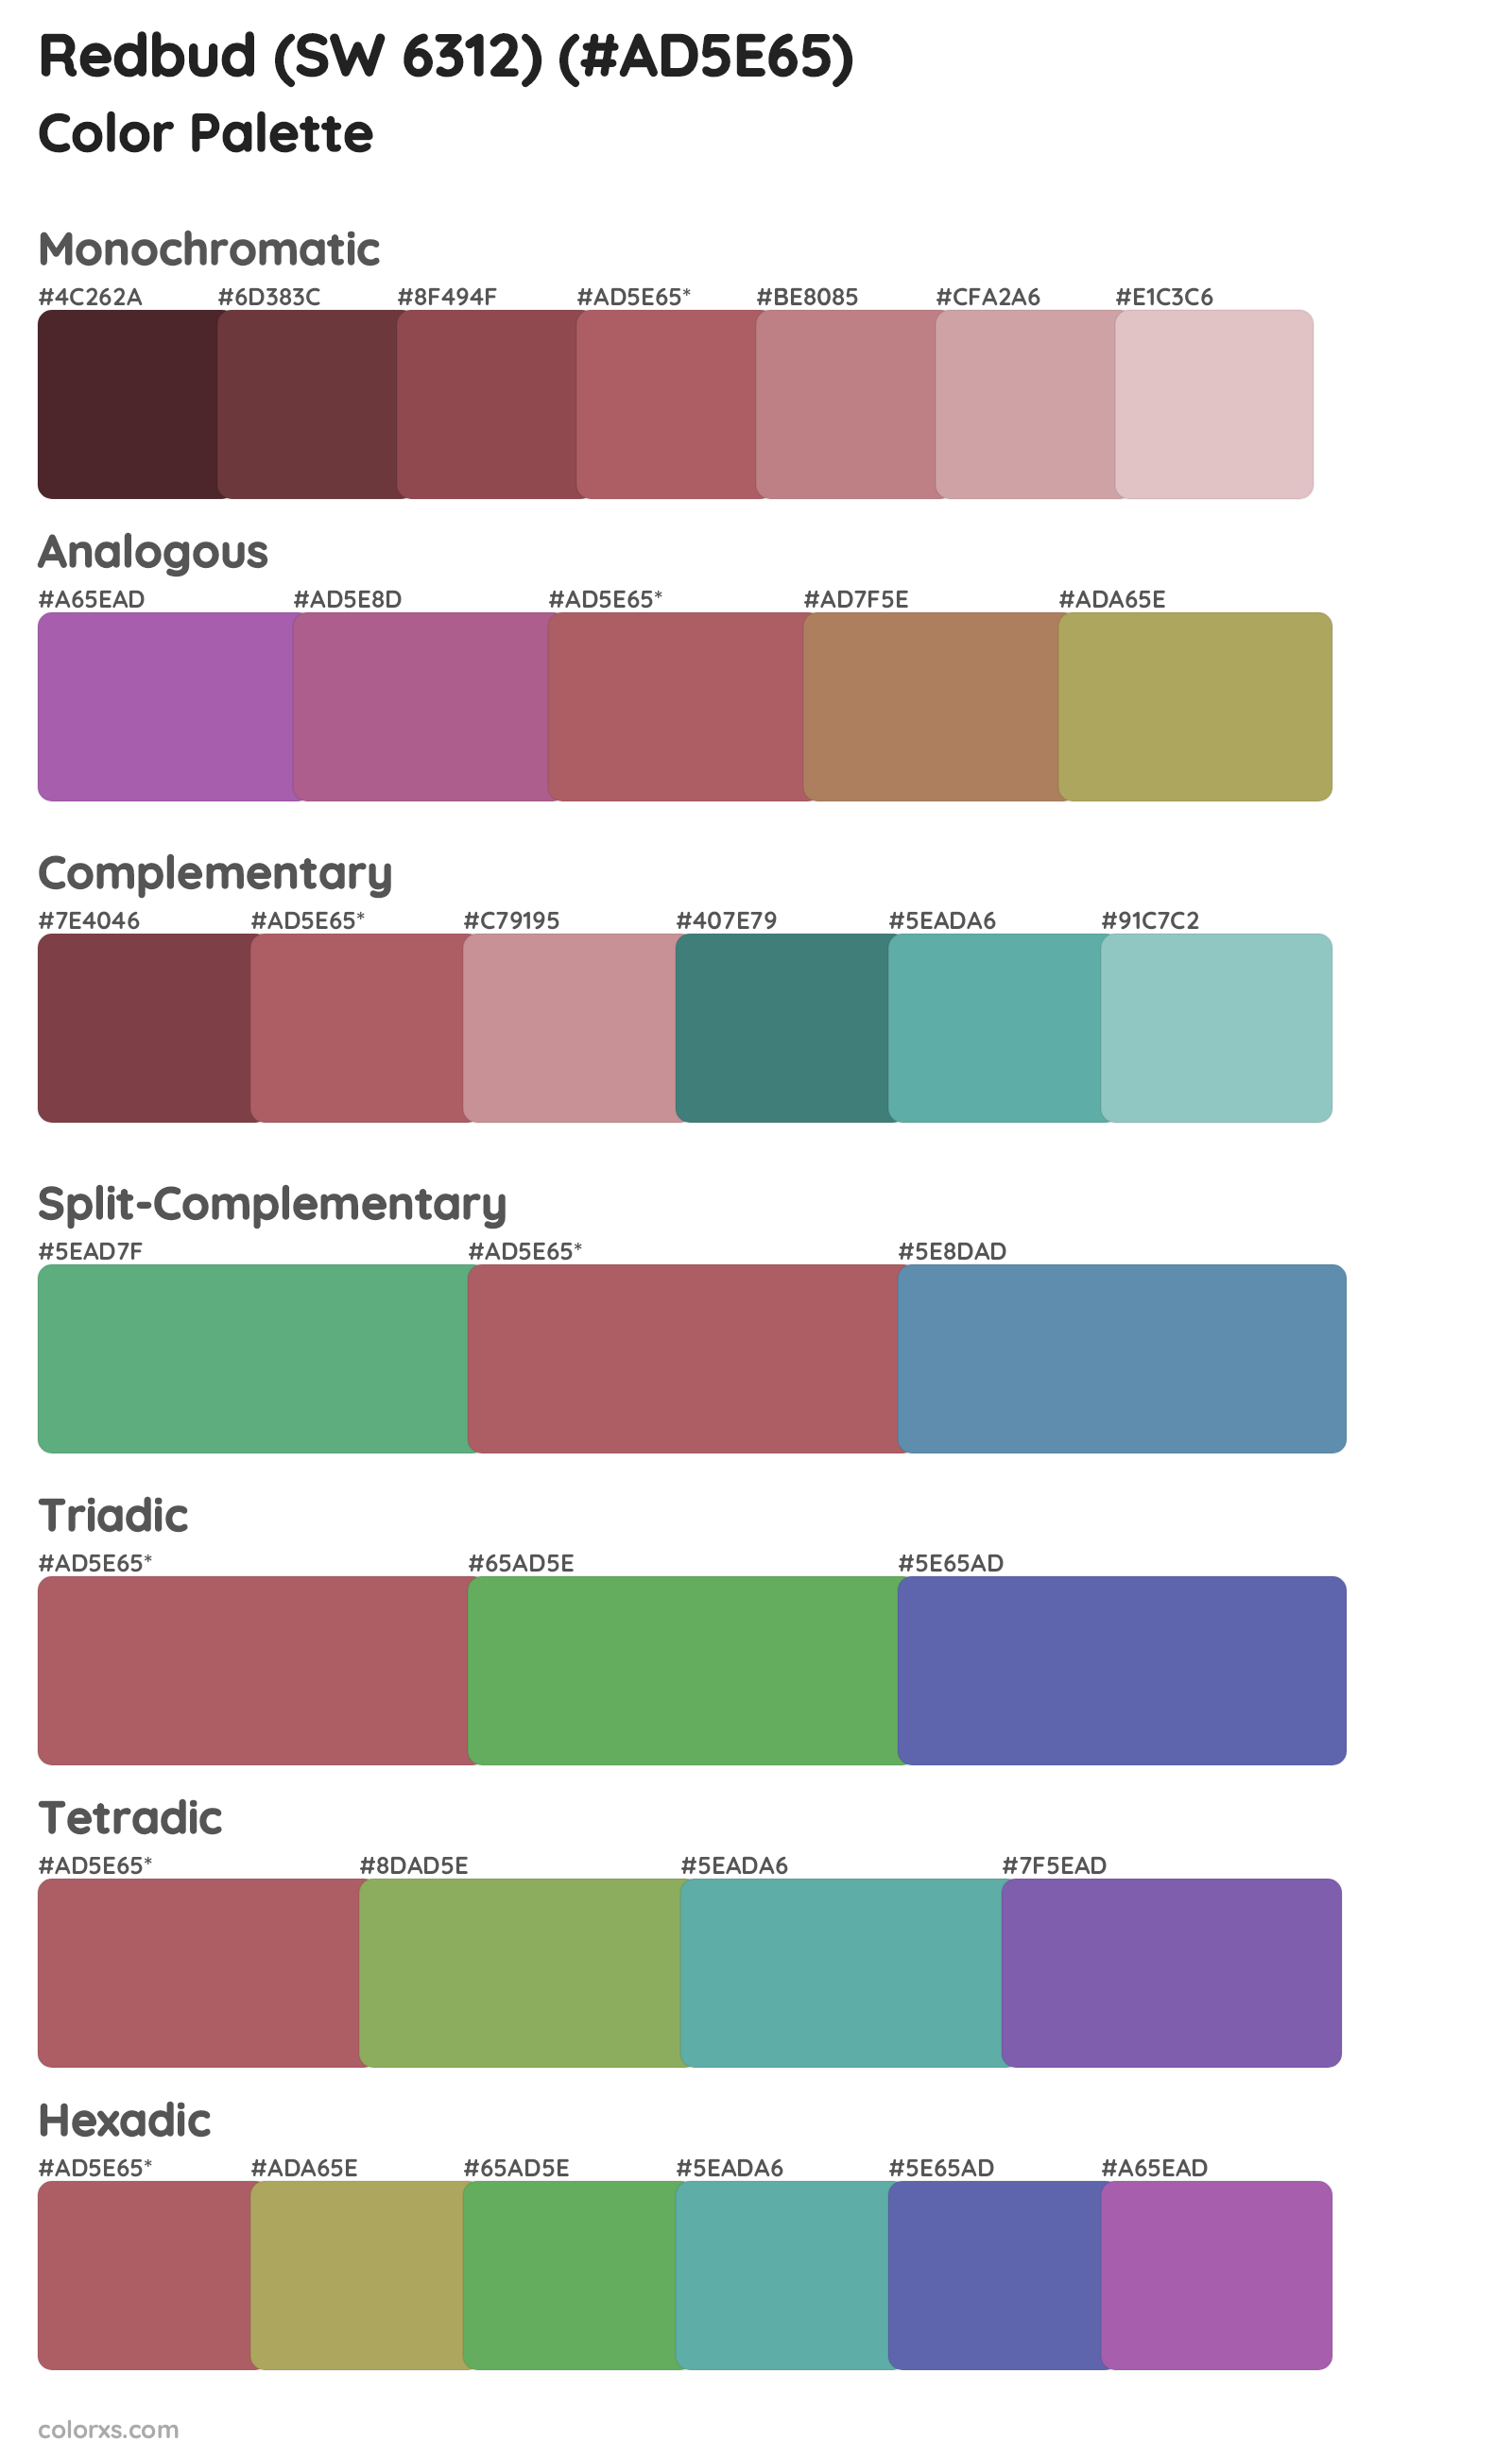 Redbud (SW 6312) Color Scheme Palettes